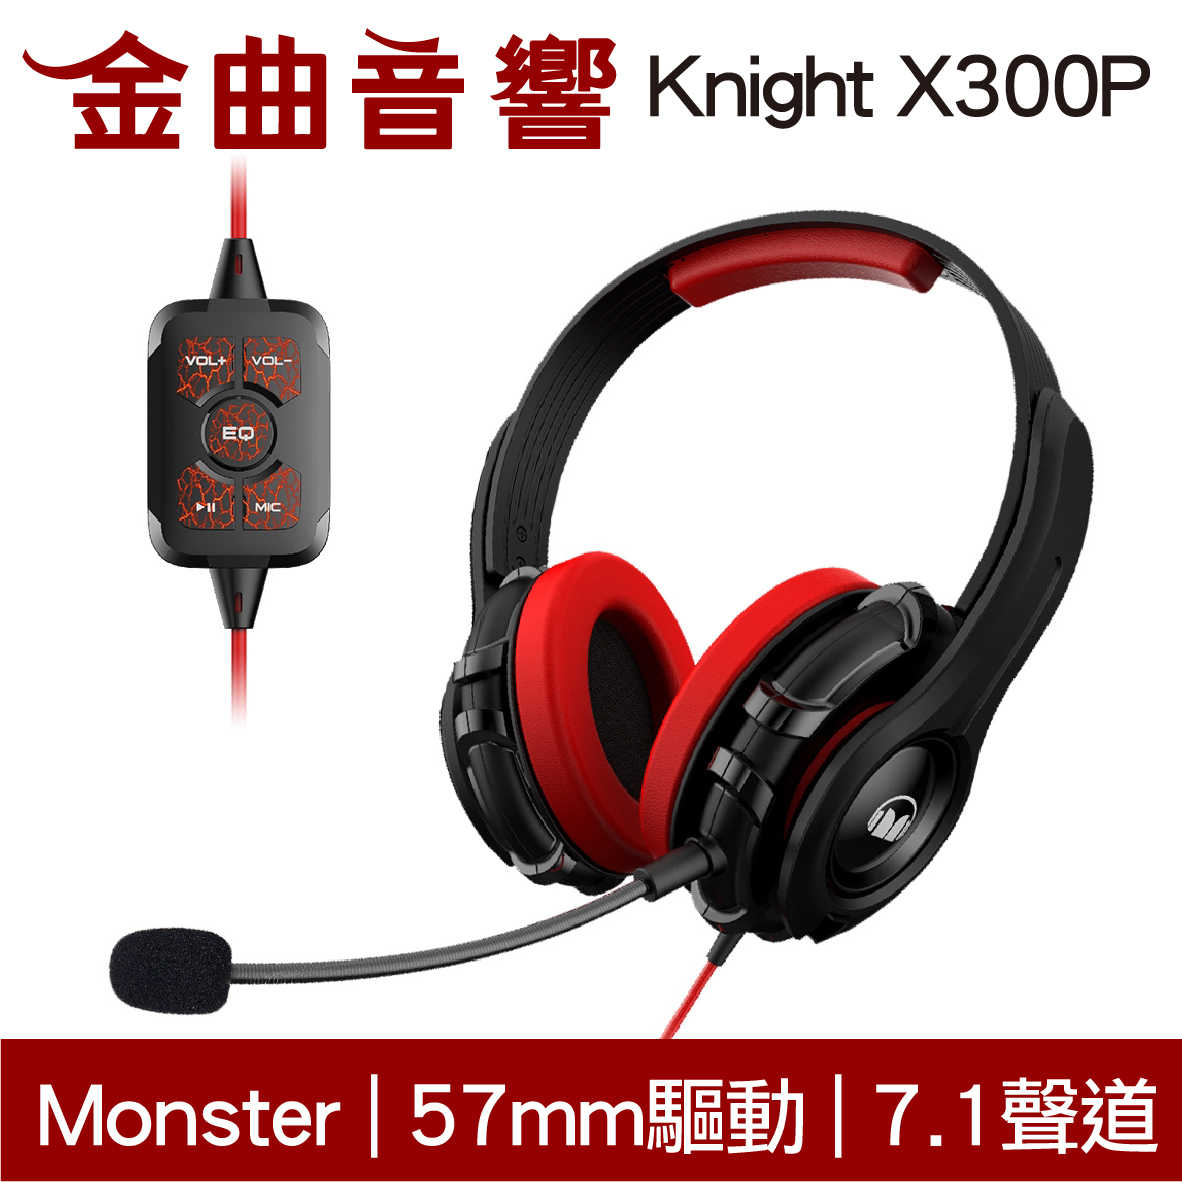 Monster 魔聲 Knight X300P 7.1聲道 57mm驅動 麥克風 電競 耳罩式 耳機 | 金曲音響